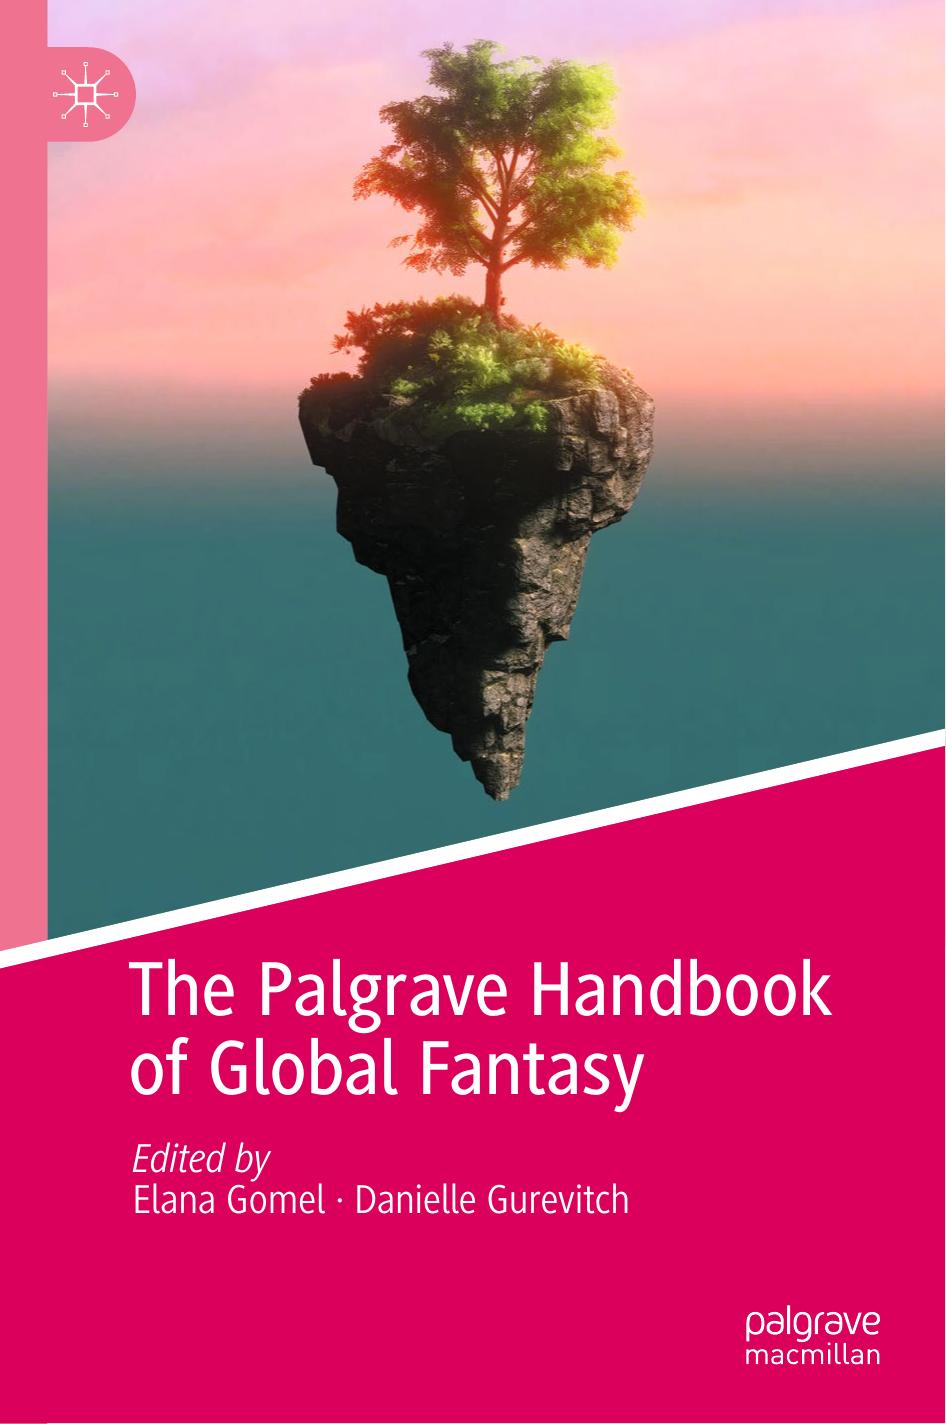 The Palgrave Handbook of Global Fantasy by Elana Gomel && Danielle Gurevitch